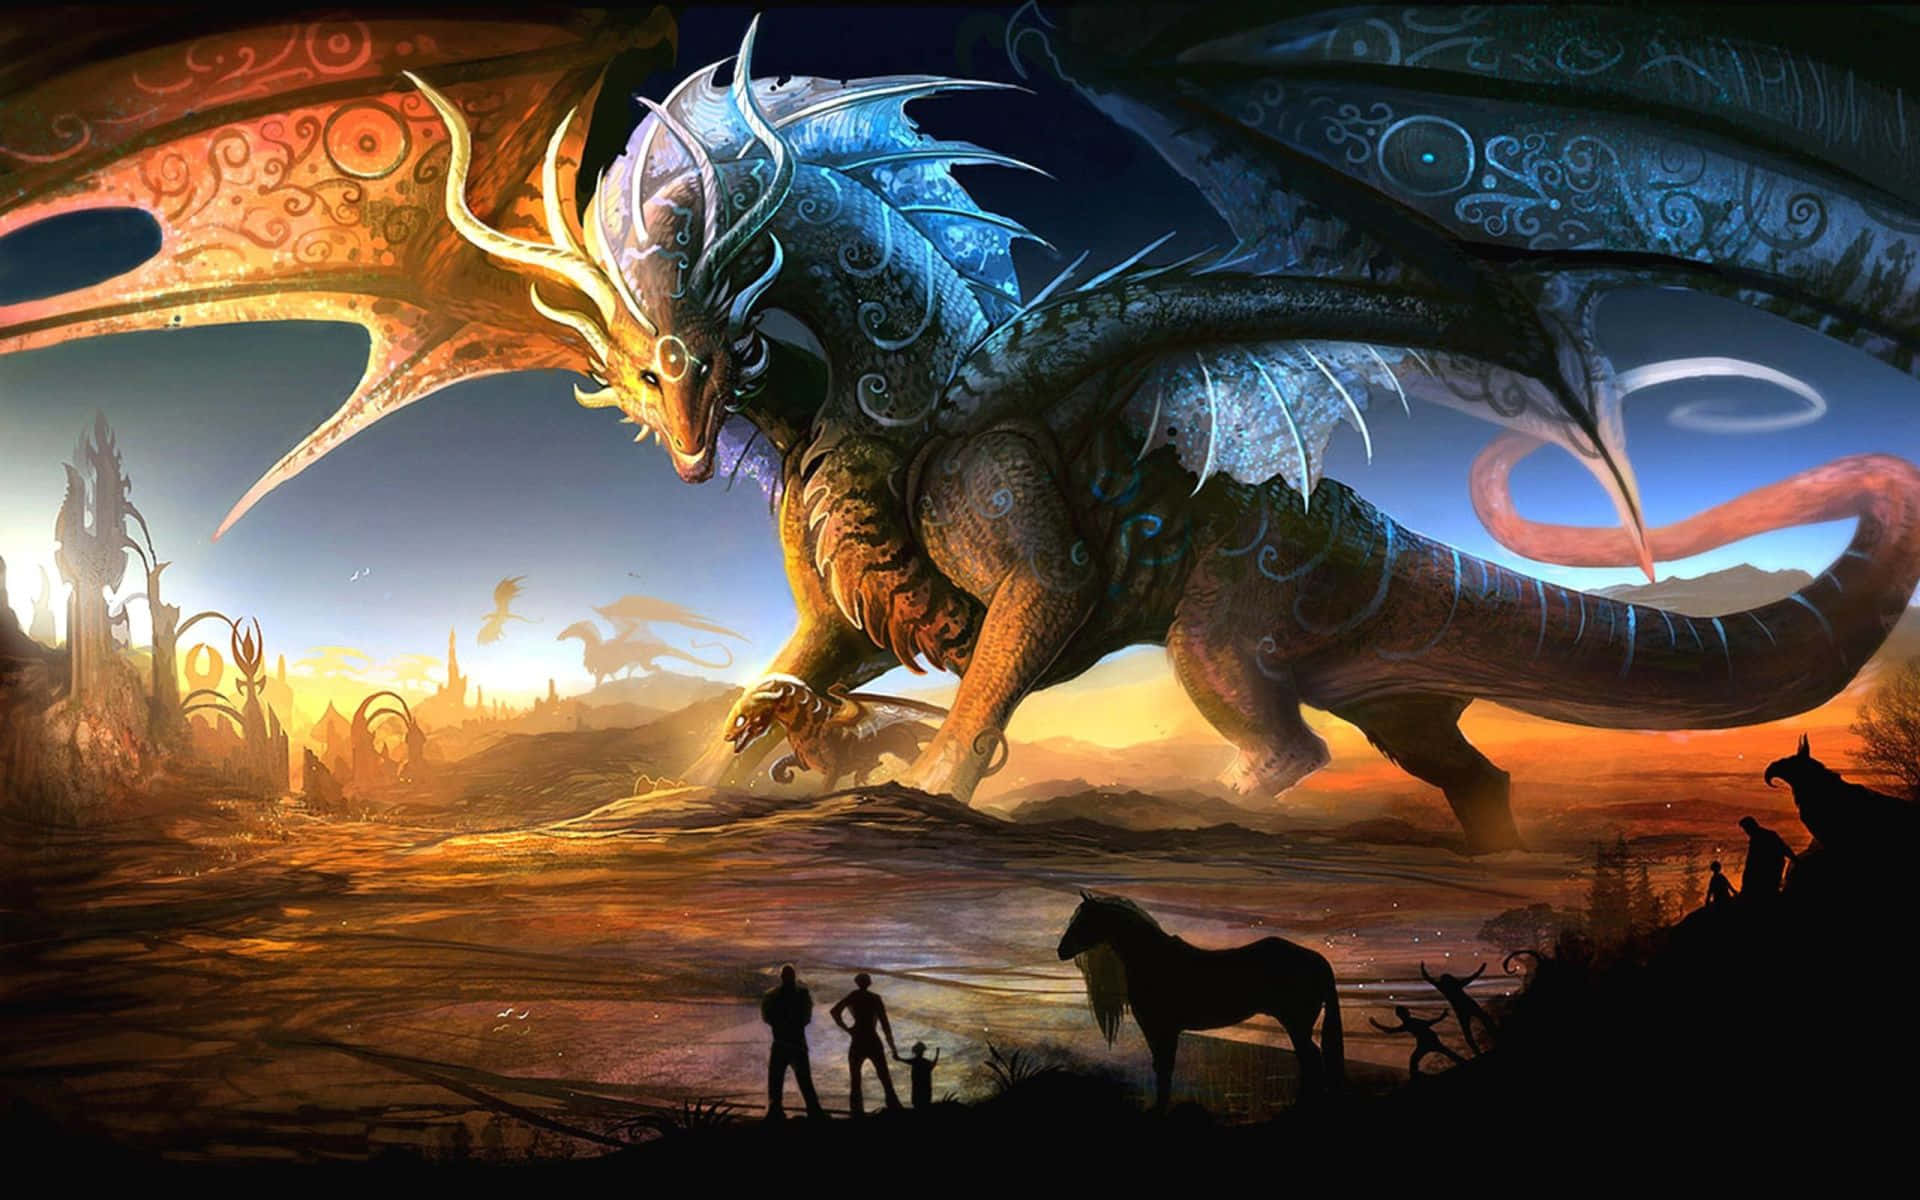 "Breathing life, the powerful dragon rises." Wallpaper